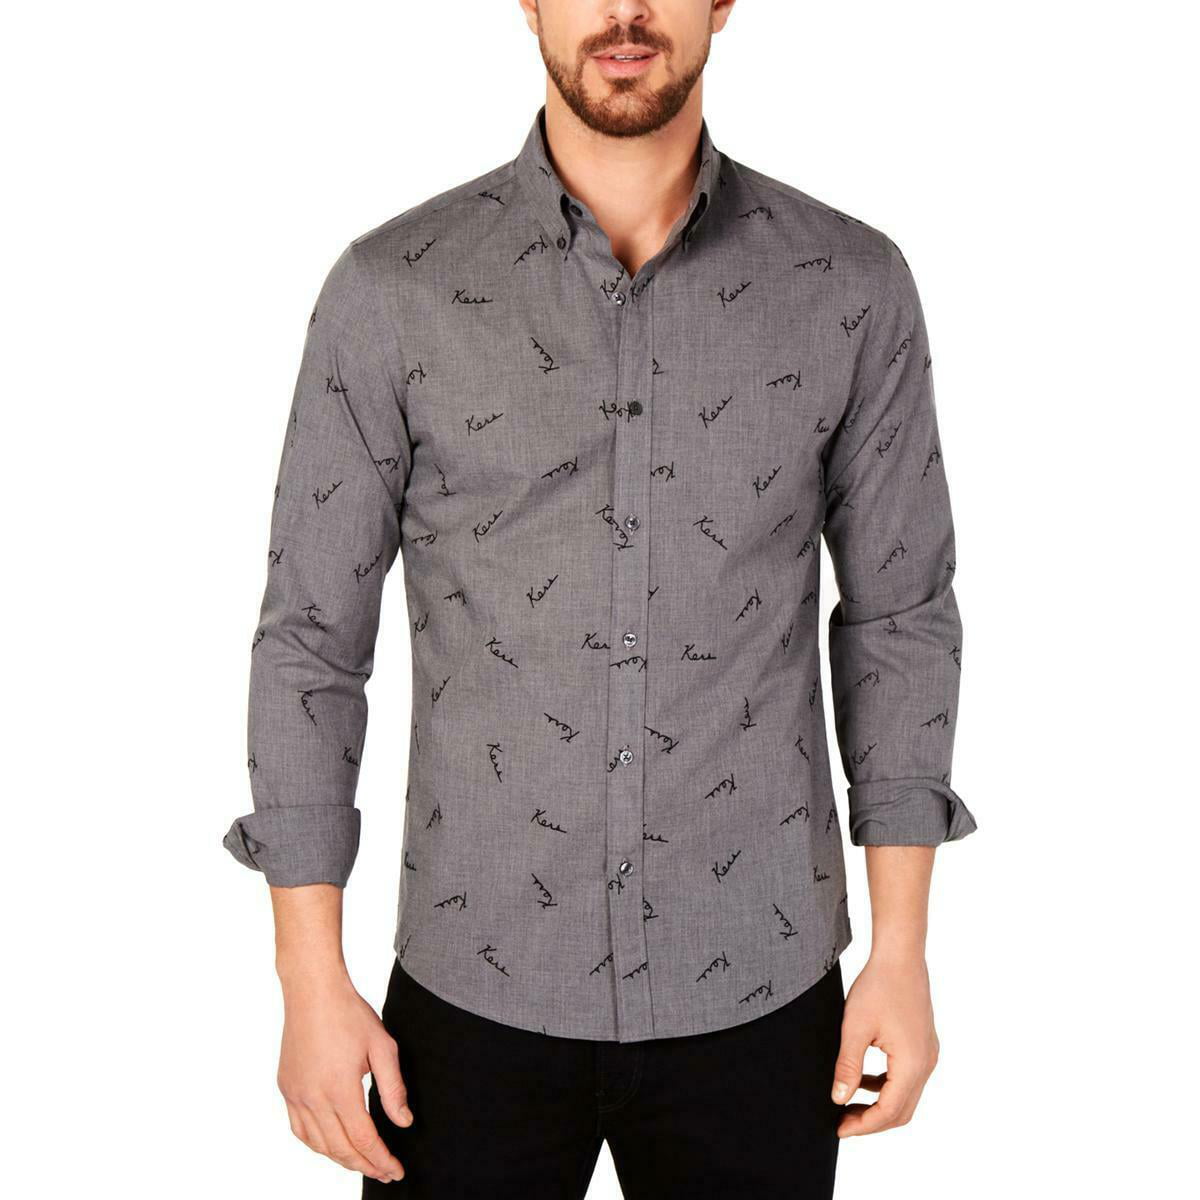 Michael Kors - Mens Shirts Gray Button-Front Script Printed $98 2XL